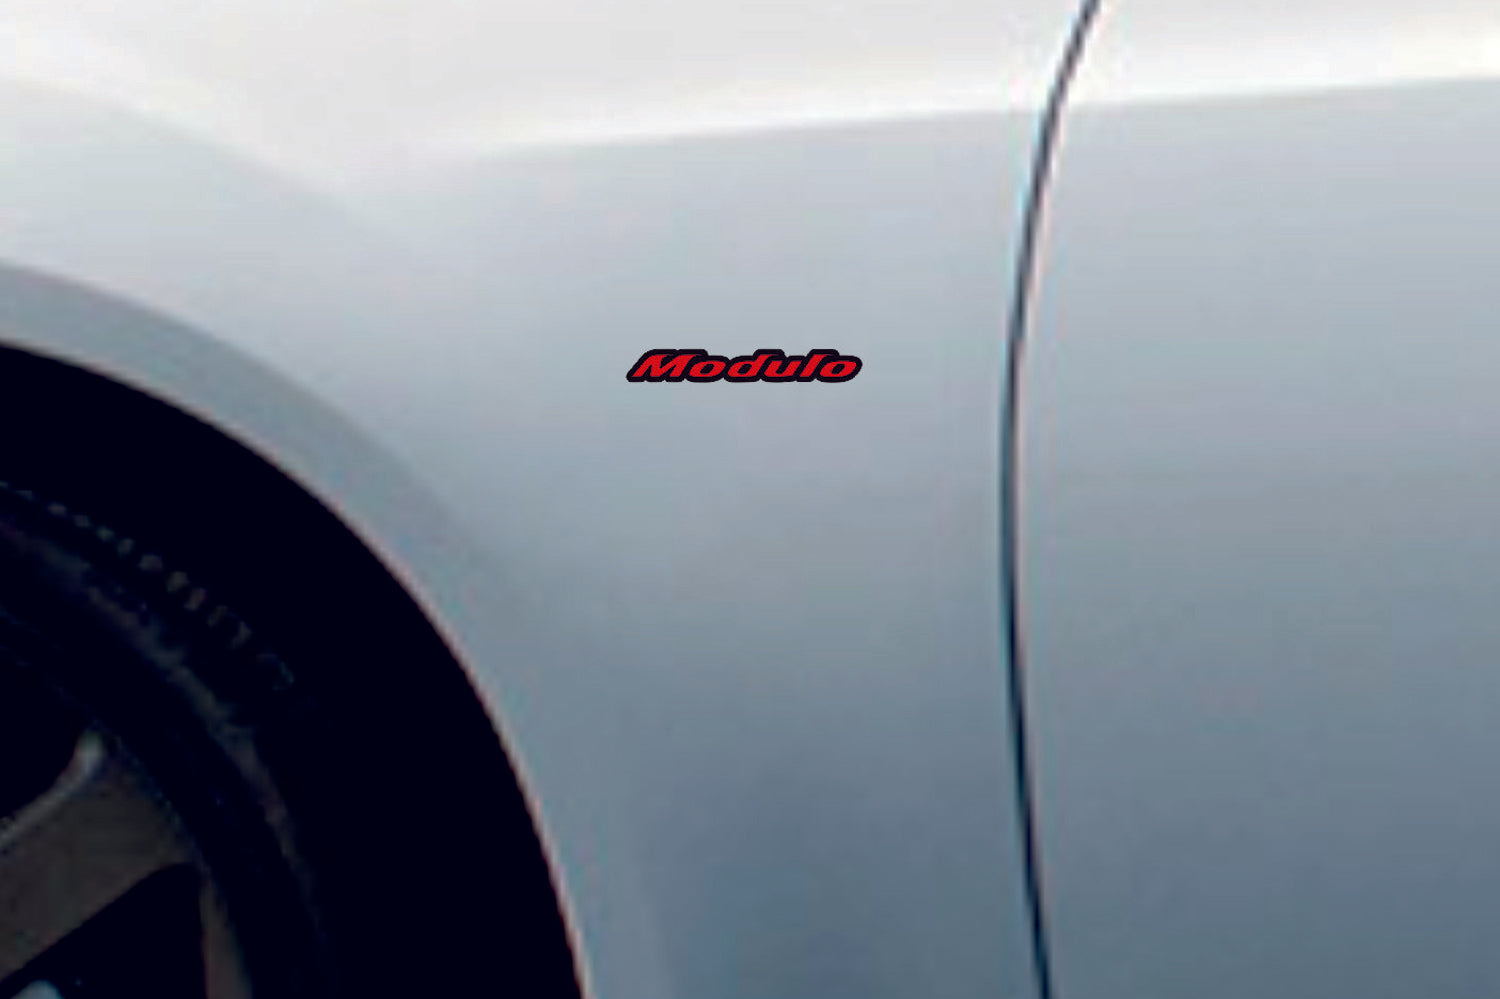 Honda emblem for fenders with Modulo logo - decoinfabric